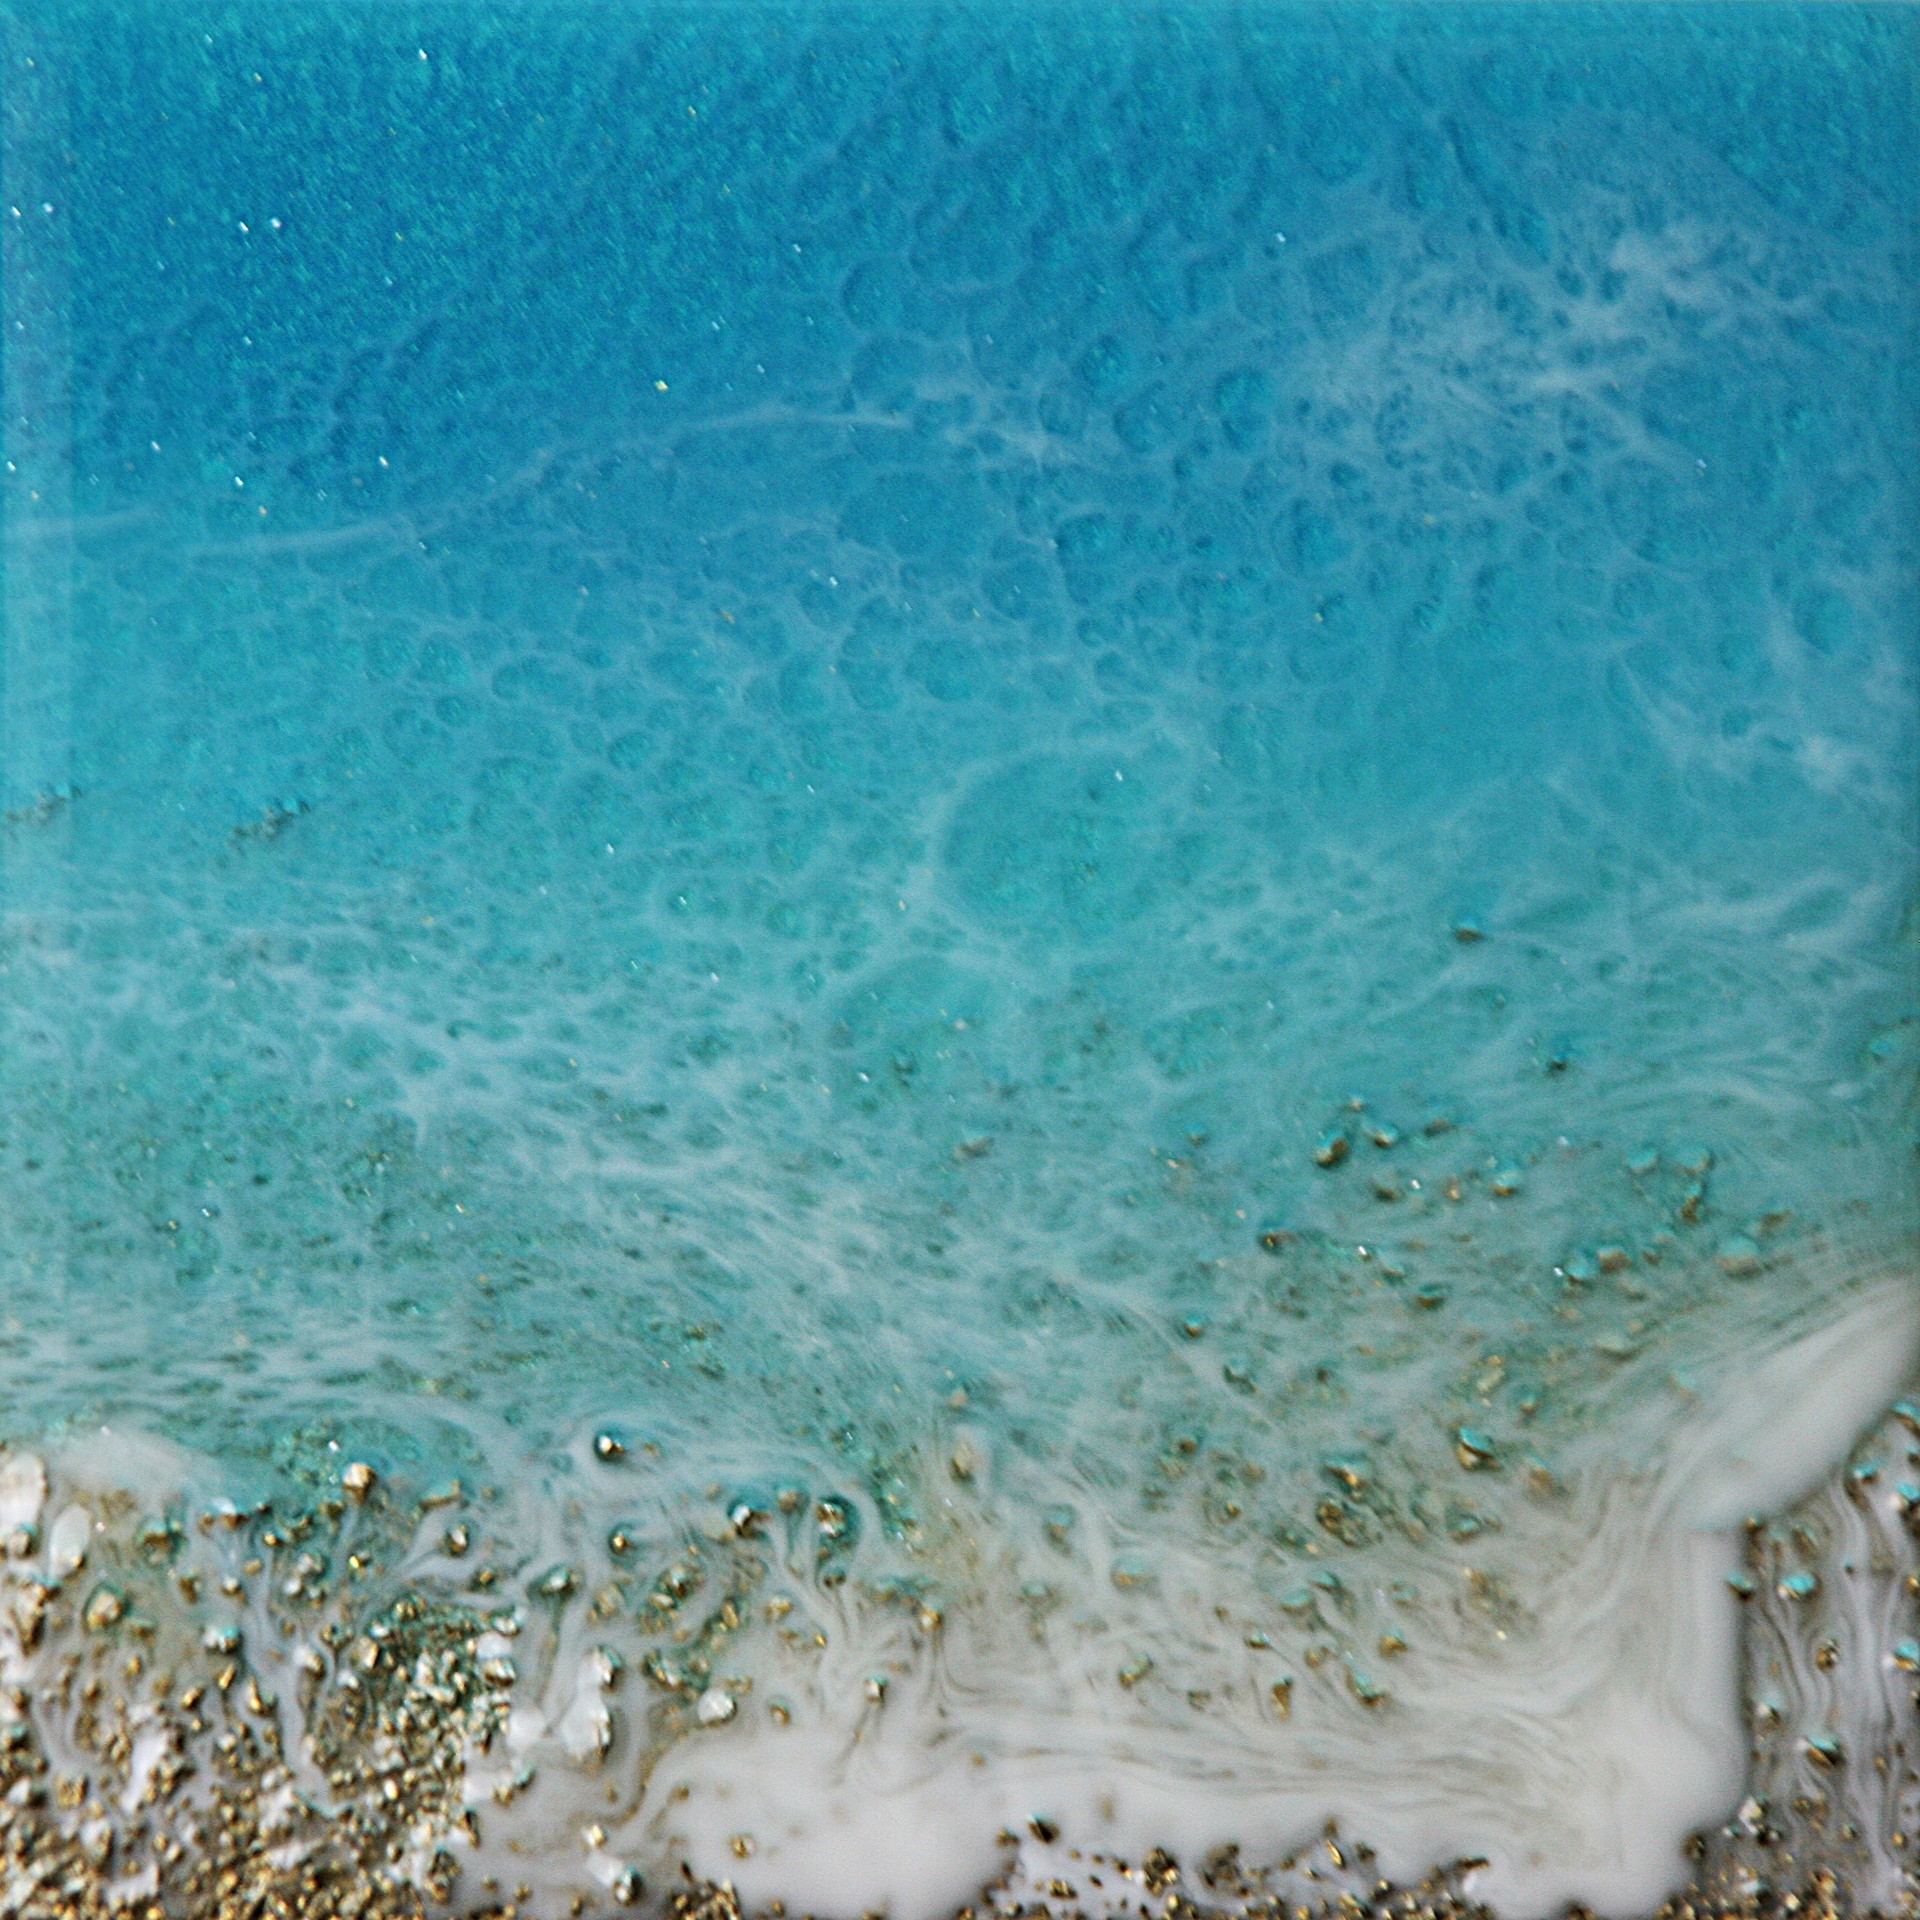 Teal Waves #22 by Ana Hefco